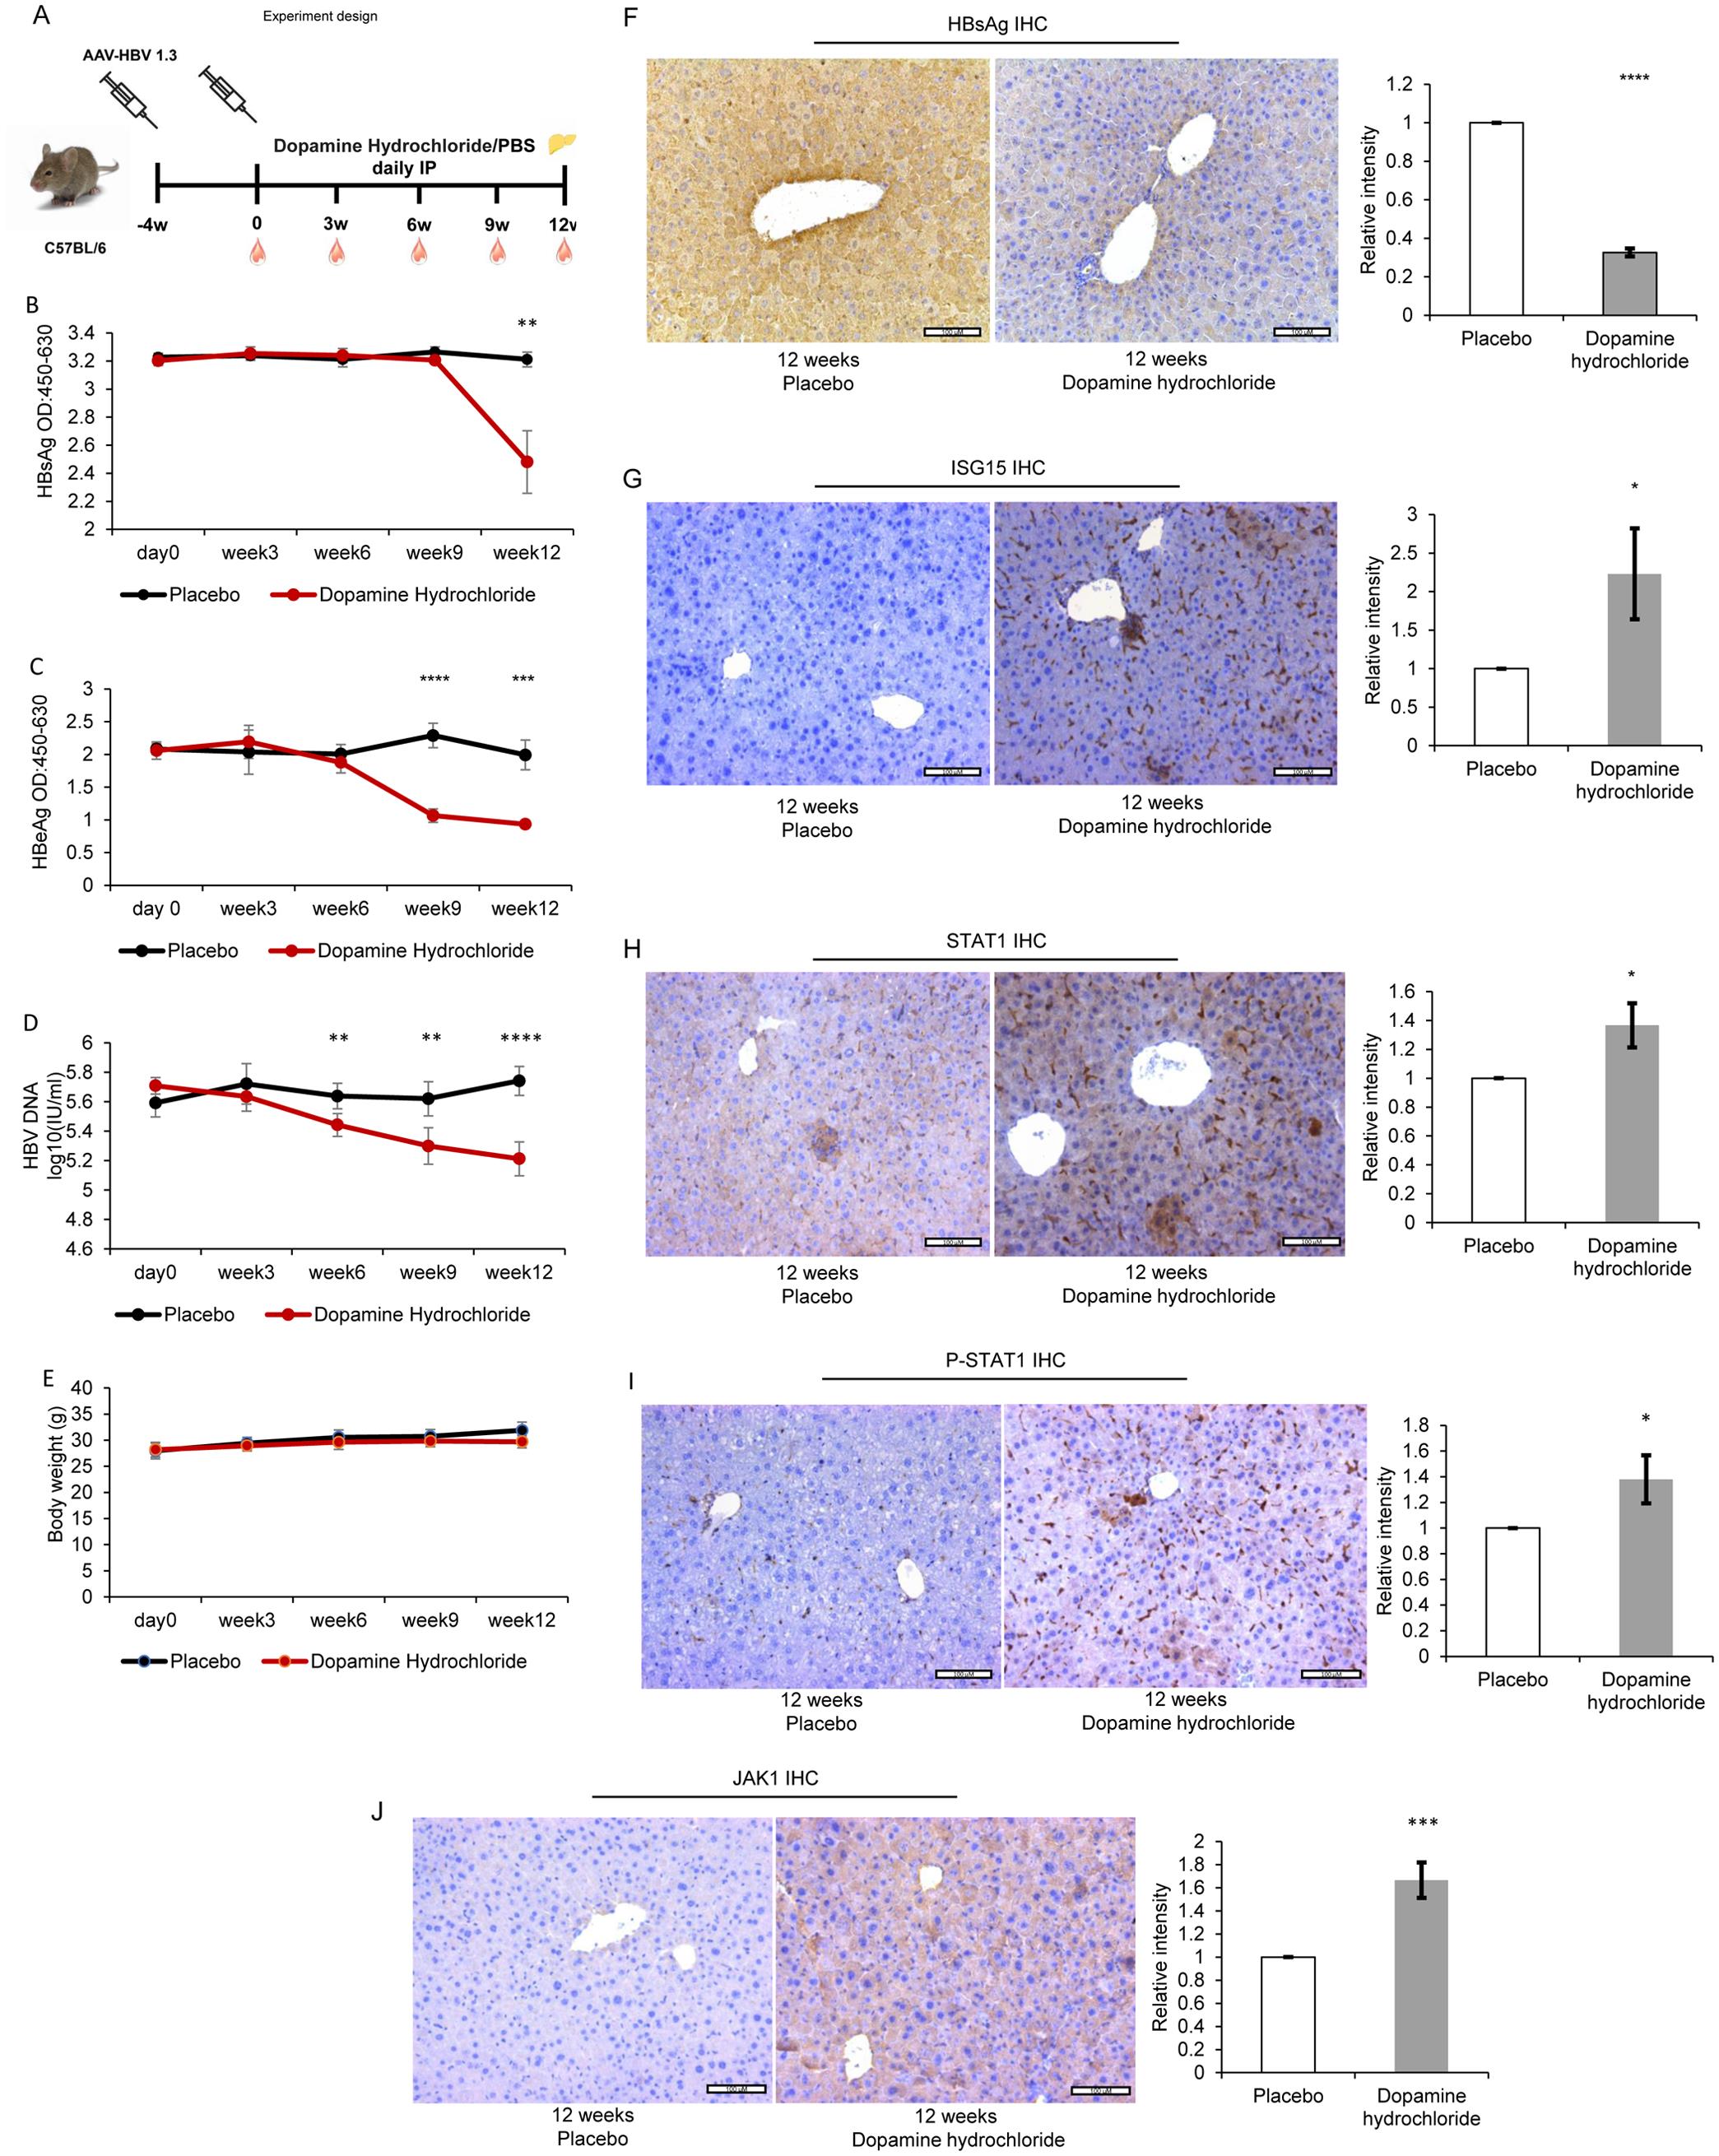 Dopamine inhibits hepatitis B virus (HBV) surface antigen (HBsAg) expression in a mouse model.